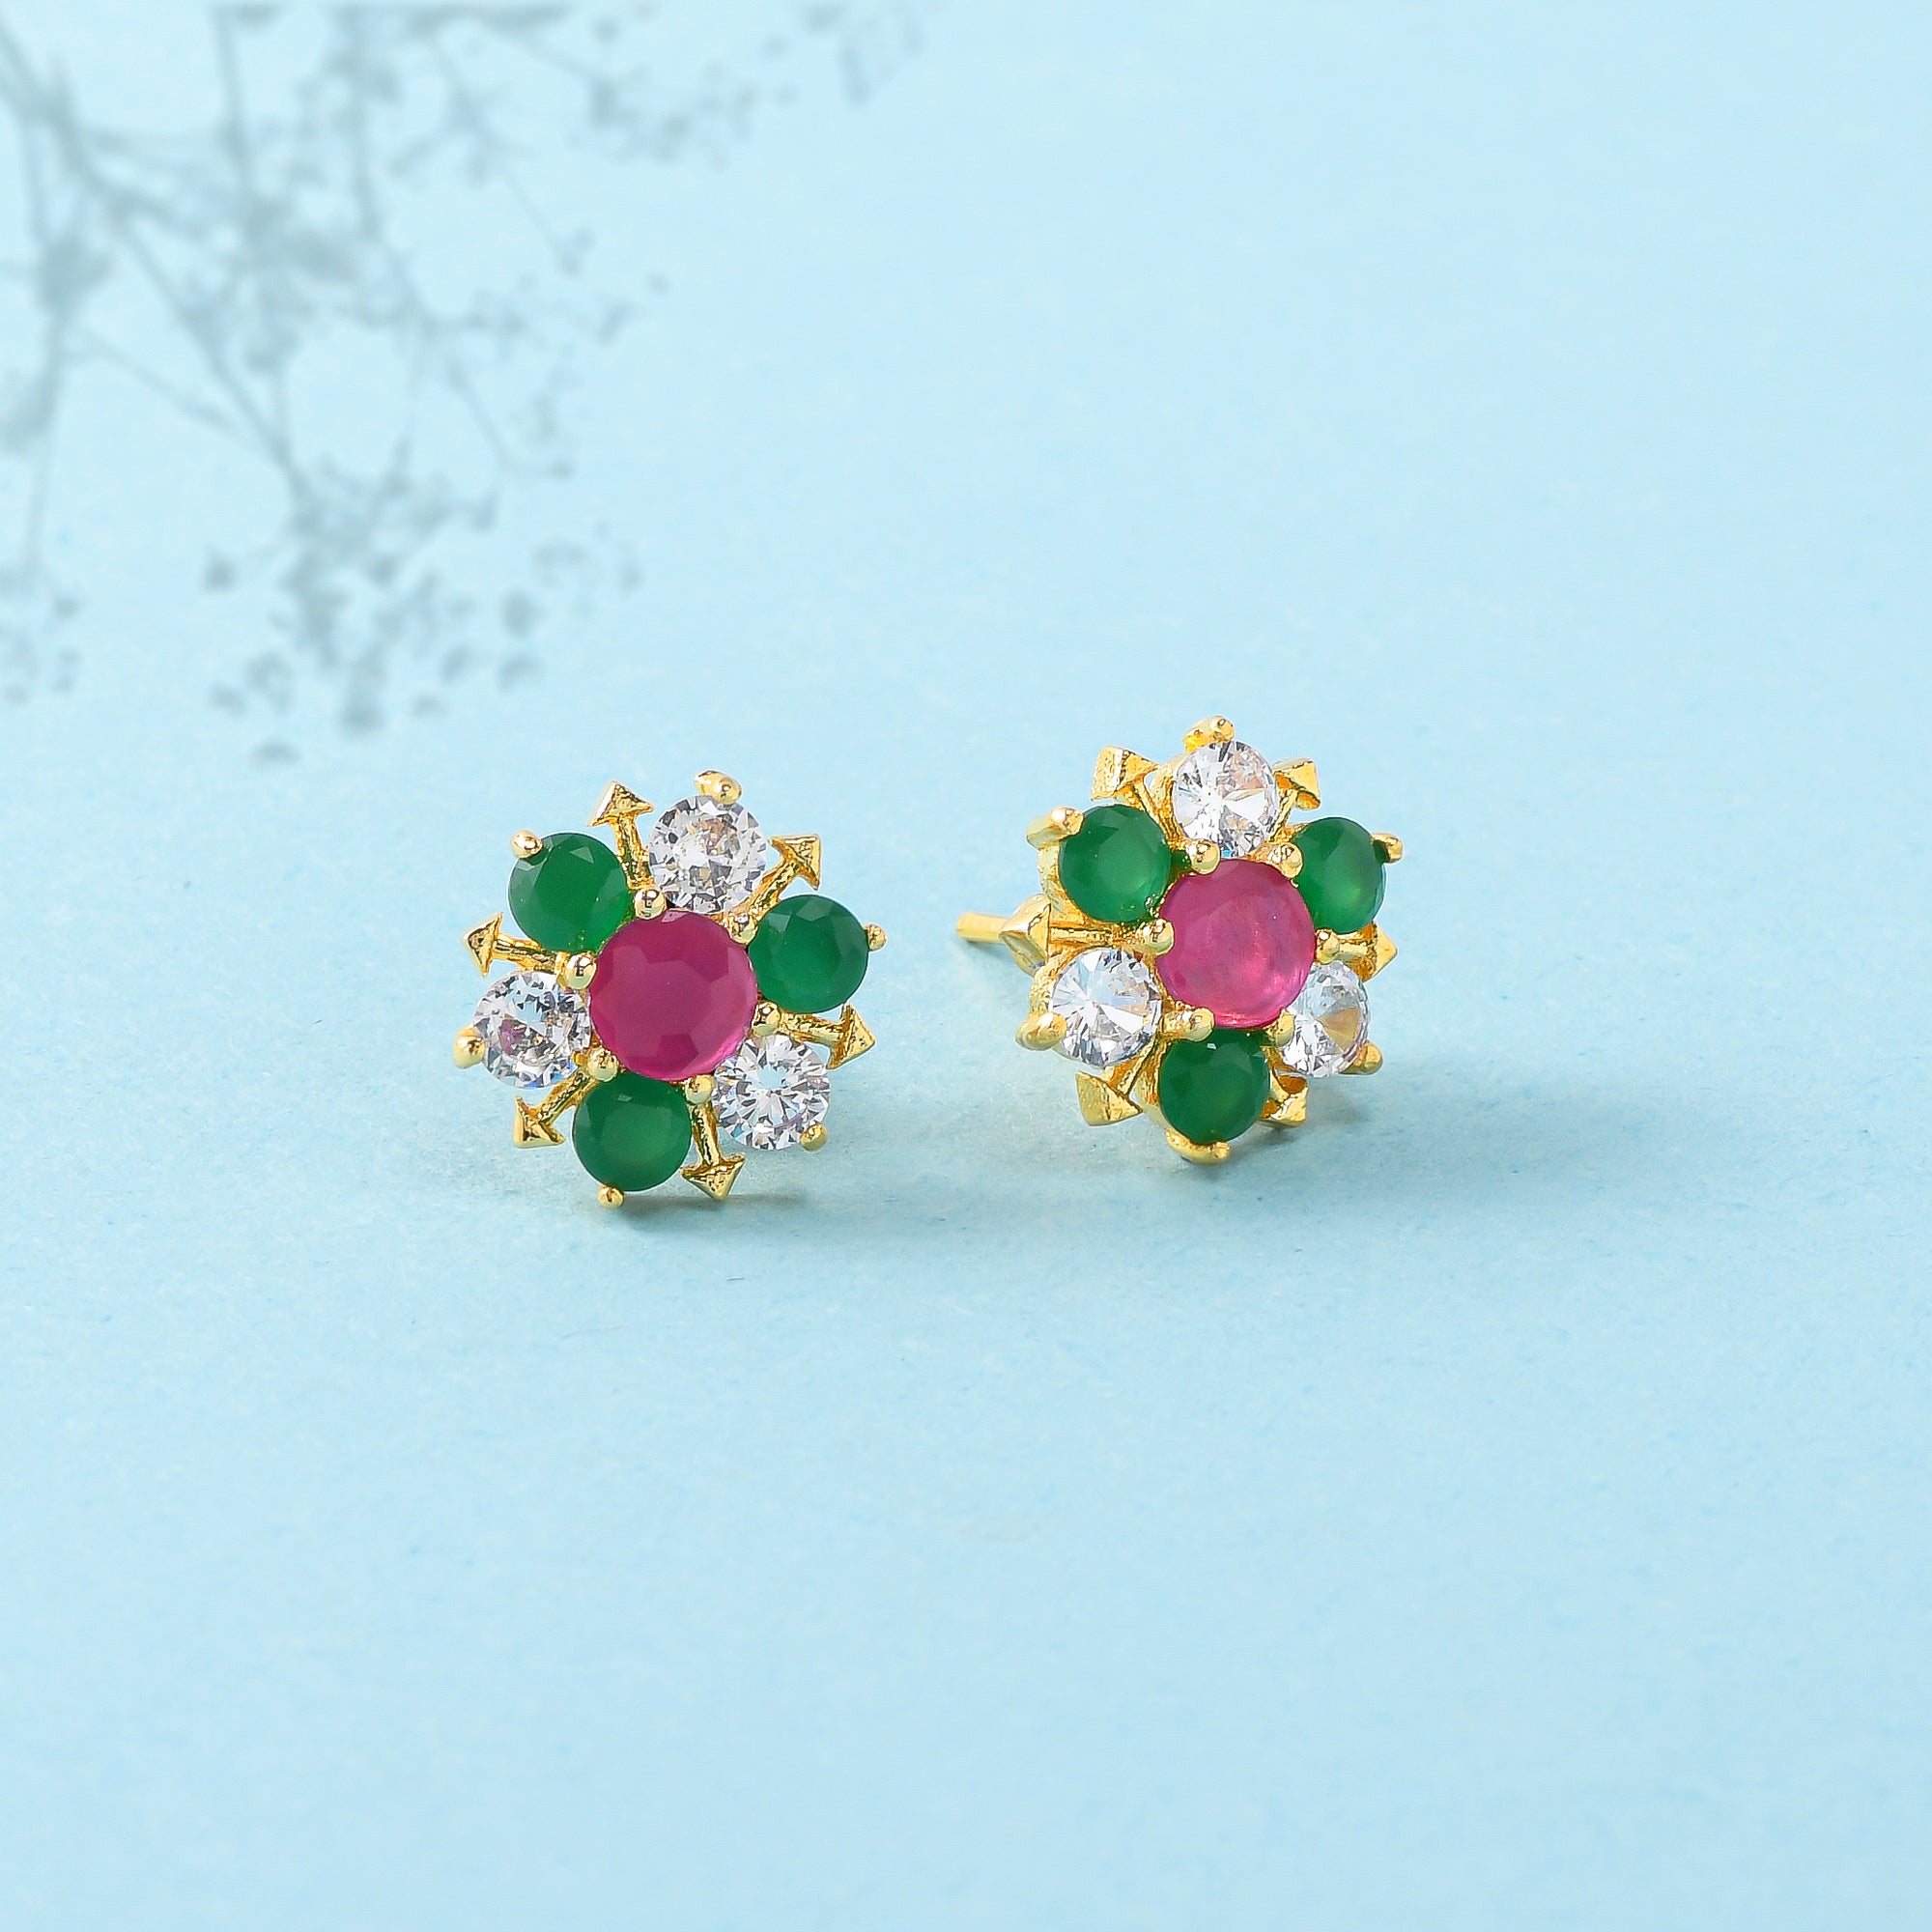 Women's Minimalistic Green And Pink Cz Stud Earrings - Voylla